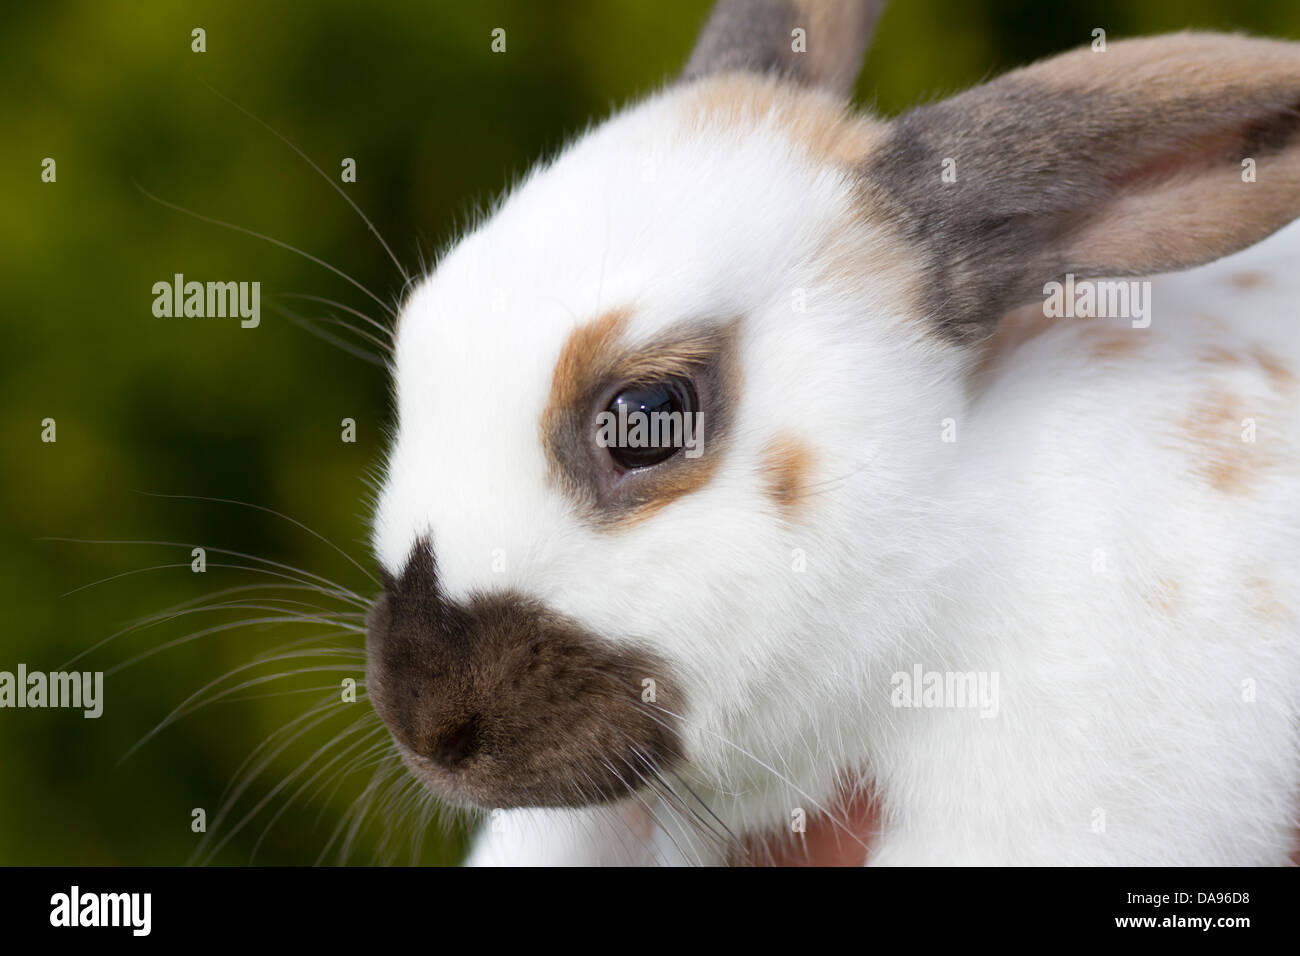 Kaninchen, englischen Ort, Ort, Thüringer, Farbe, Porträt, Haustier, Haustiere, Stockfoto